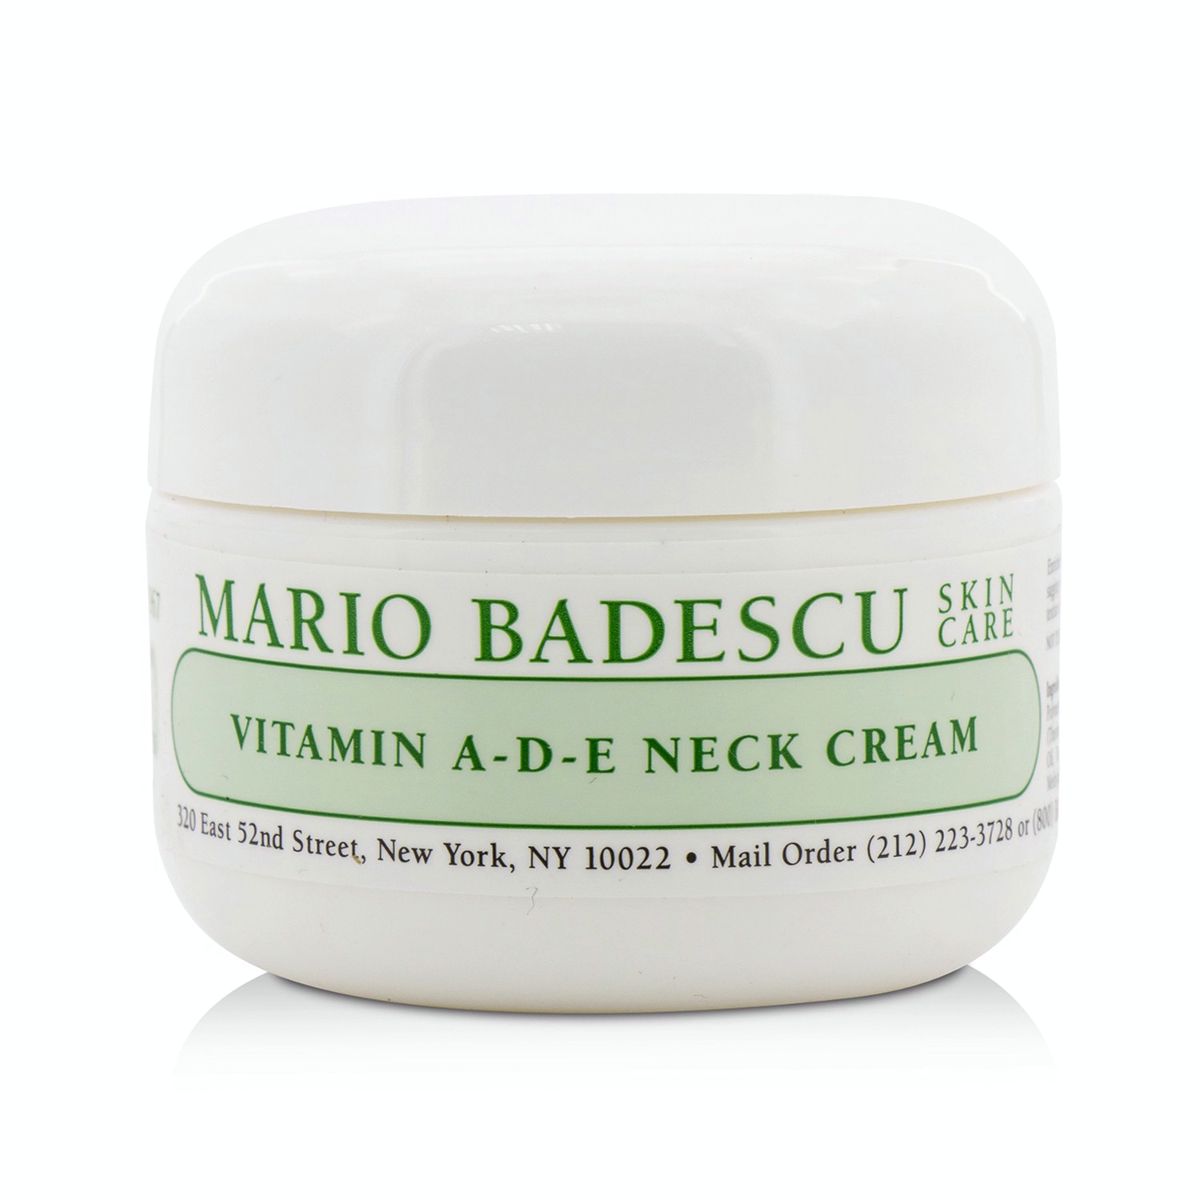 Vitamin A-D-E Neck Cream - For Combination/ Dry/ Sensitive Skin Types Mario Badescu Image